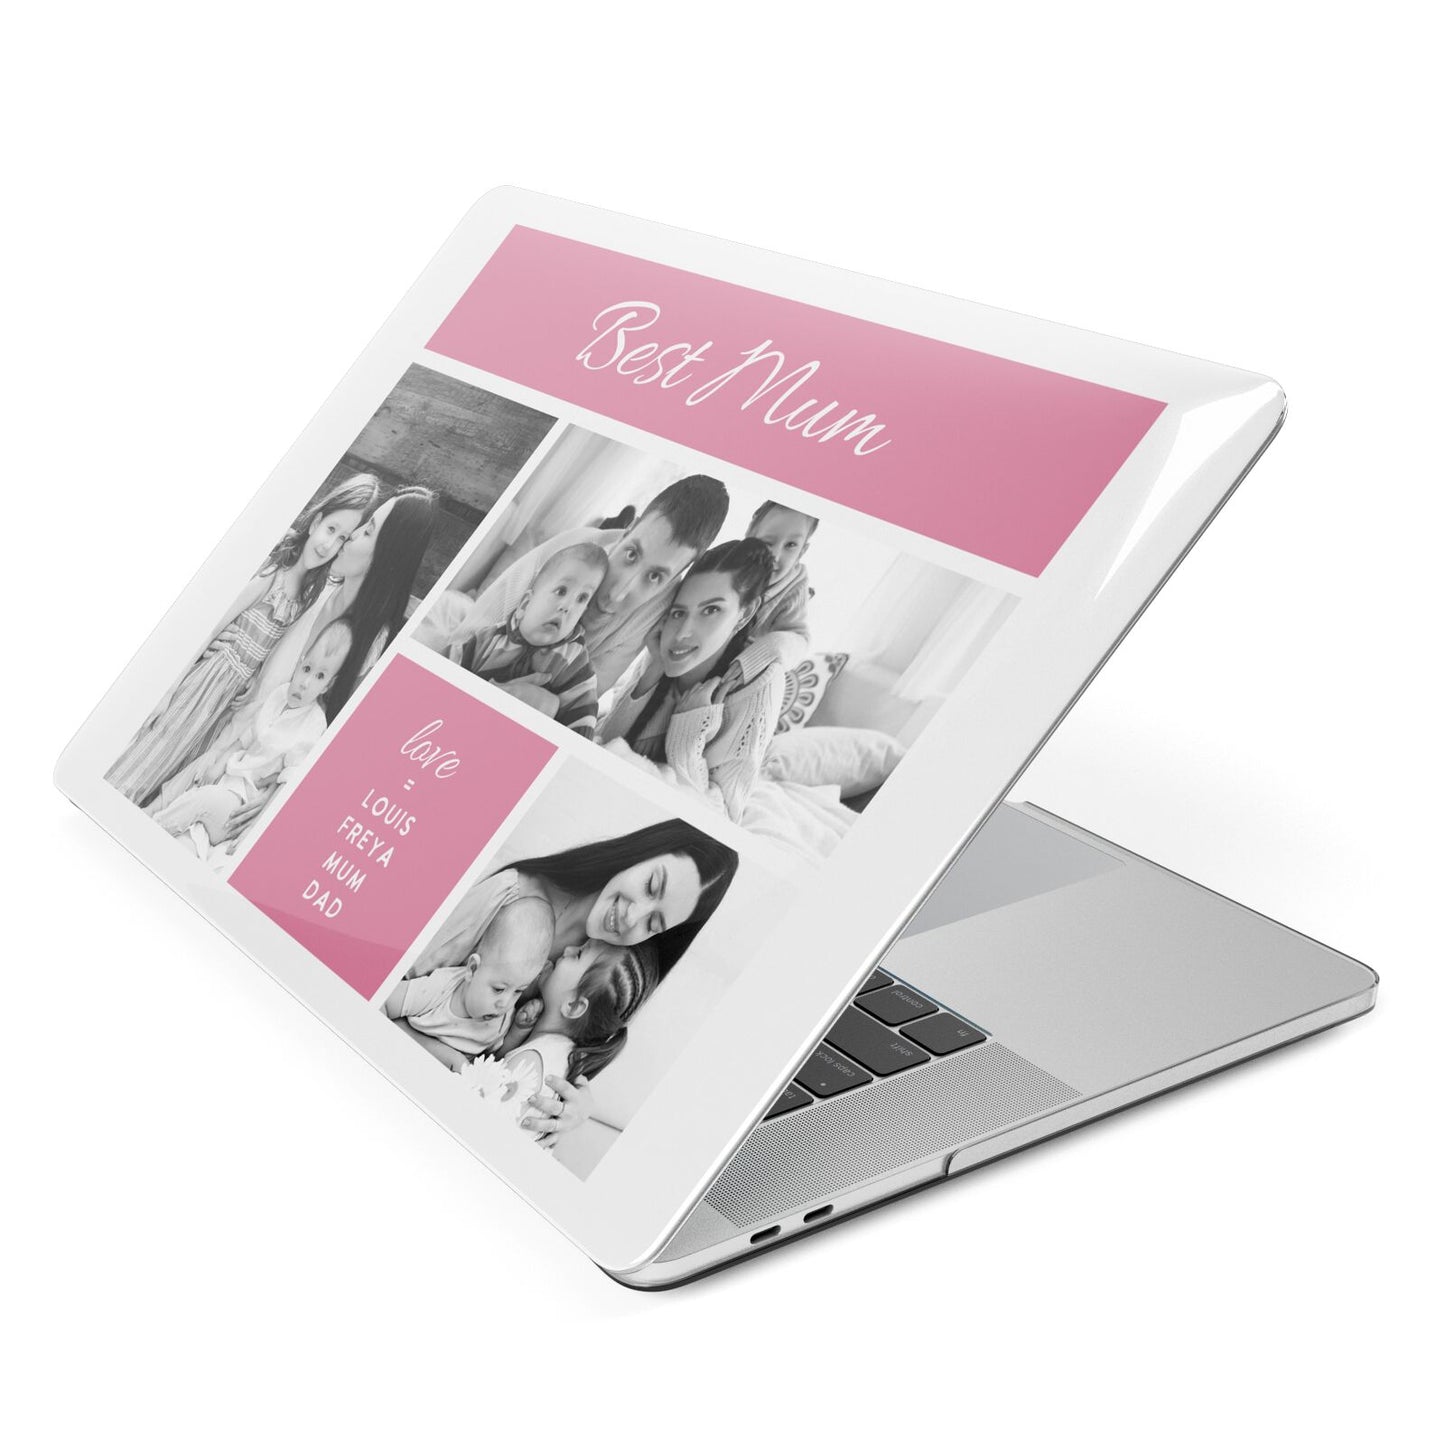 Best Mum Photo Collage Personalised Apple MacBook Case Side View